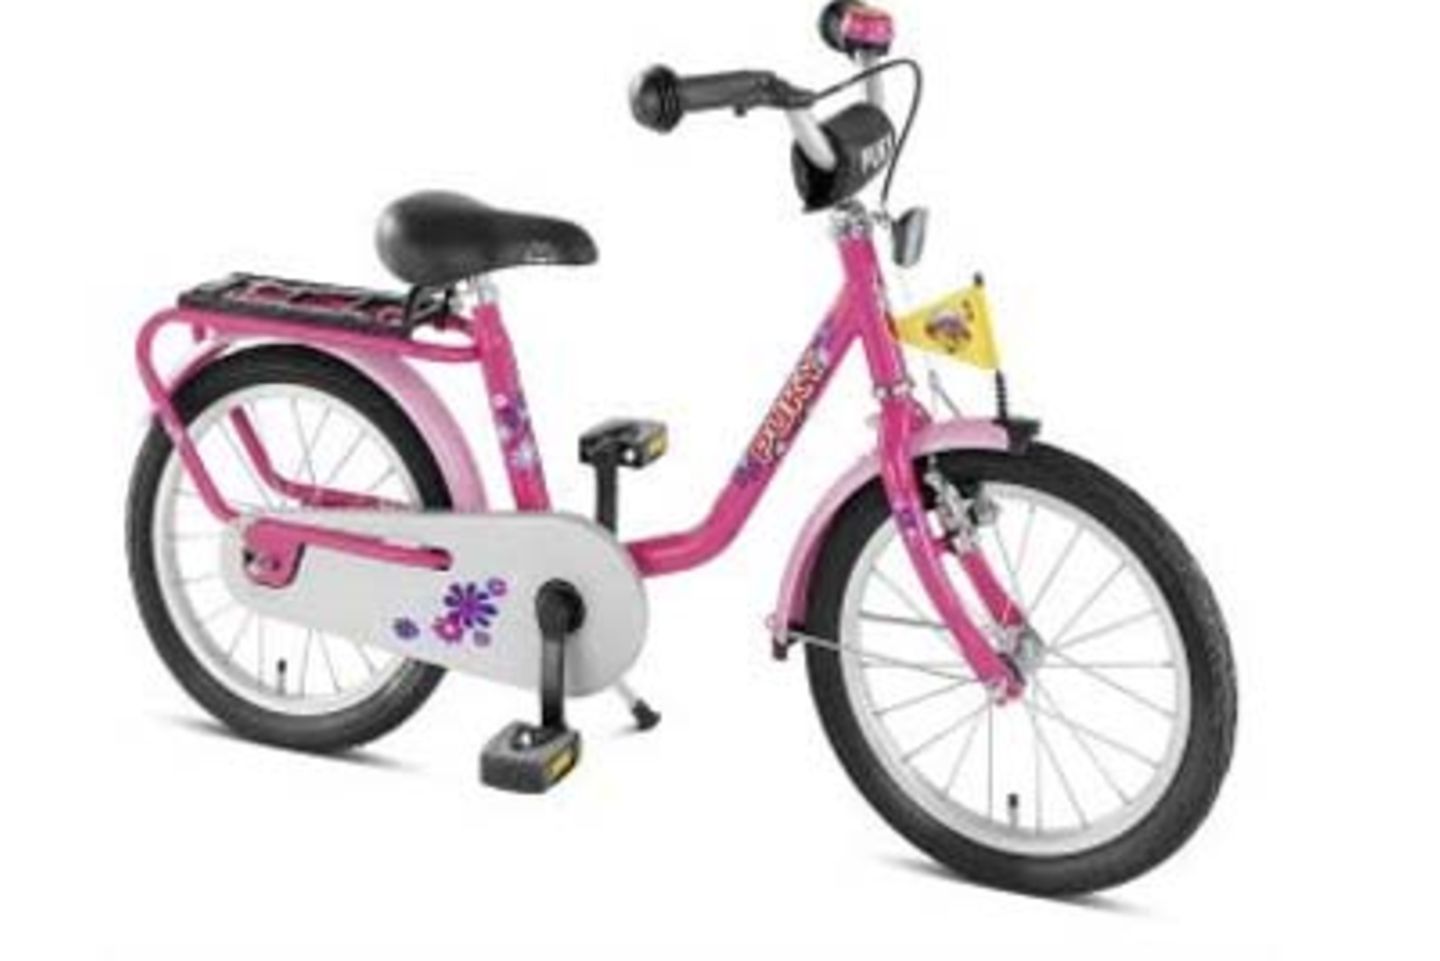 Kinderfahrzeuge: Fahrrad von "Puky" über Babyonlineshop.de